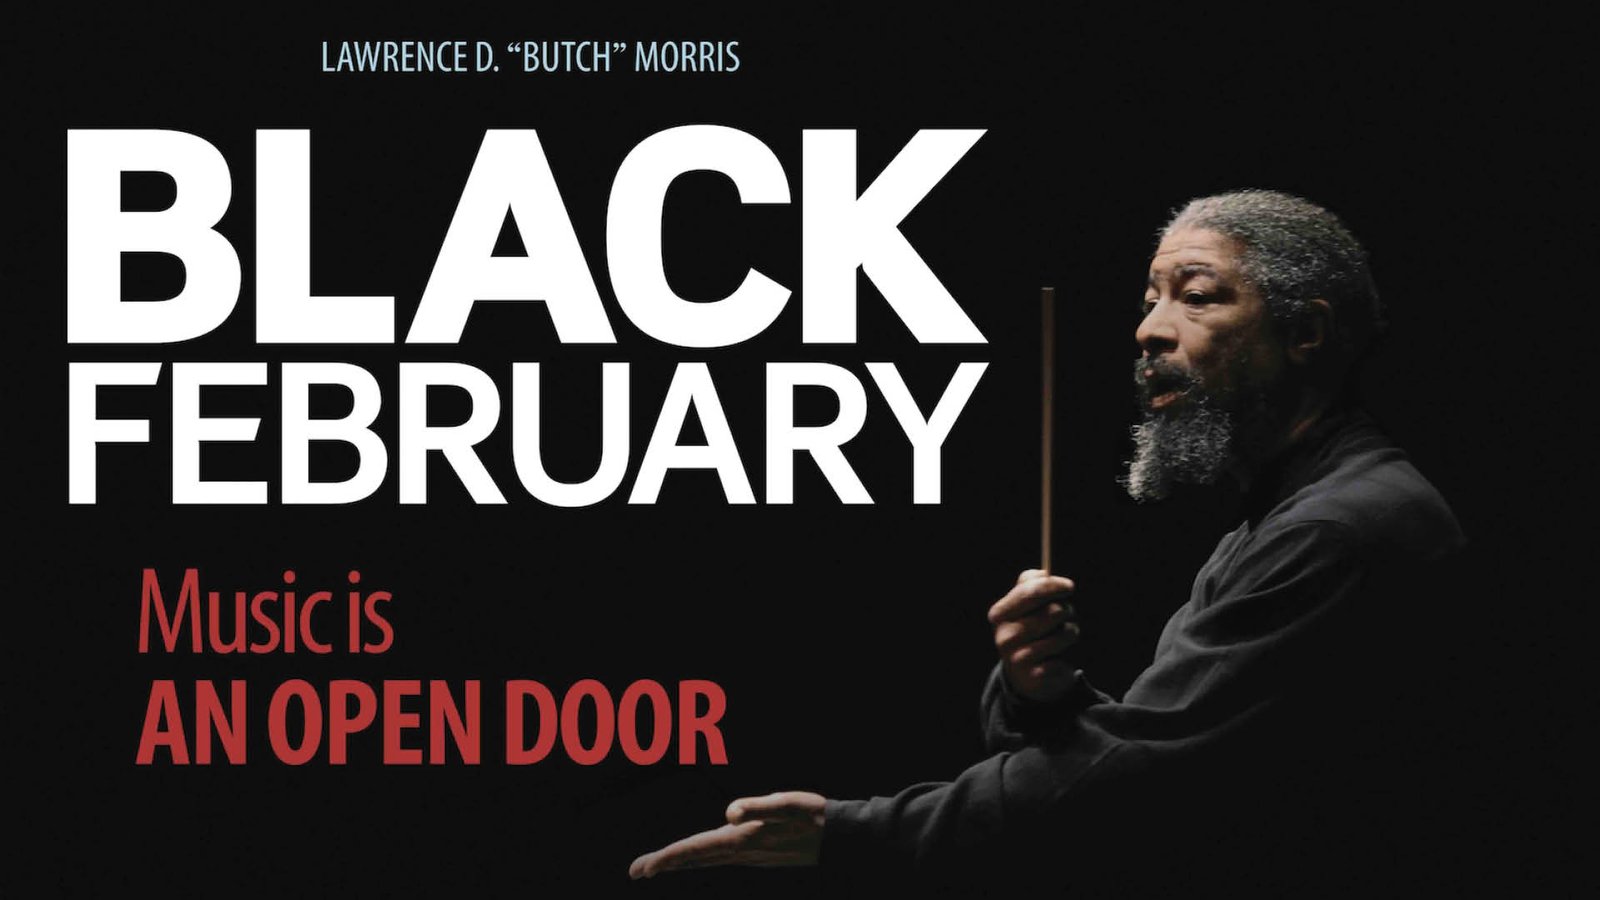 Black February - Legendary Jazz Composer Lawrence D. “Butch” Morris